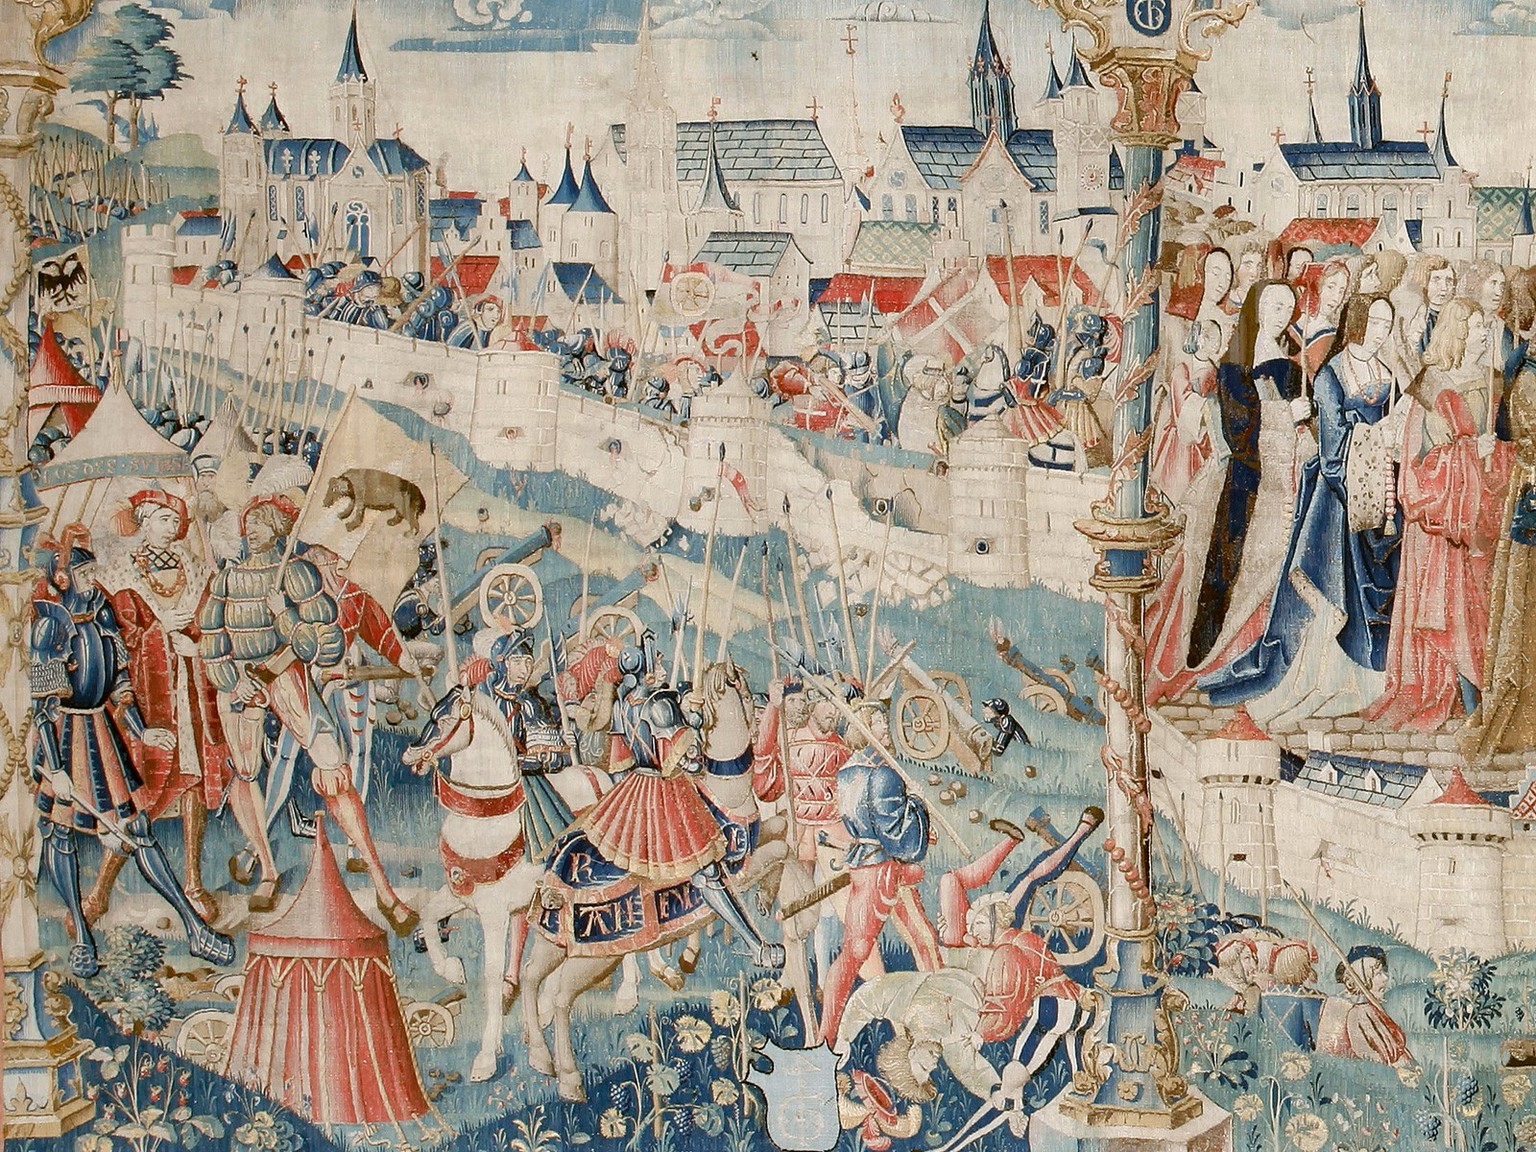 Tapisserie du siège de Dijon, env. 1514-1520 (détail).
http://mba-collections.dijon.fr/ow4/mba/voir.xsp?id=00101-8875&amp;qid=sdx_q2&amp;n=1&amp;e=